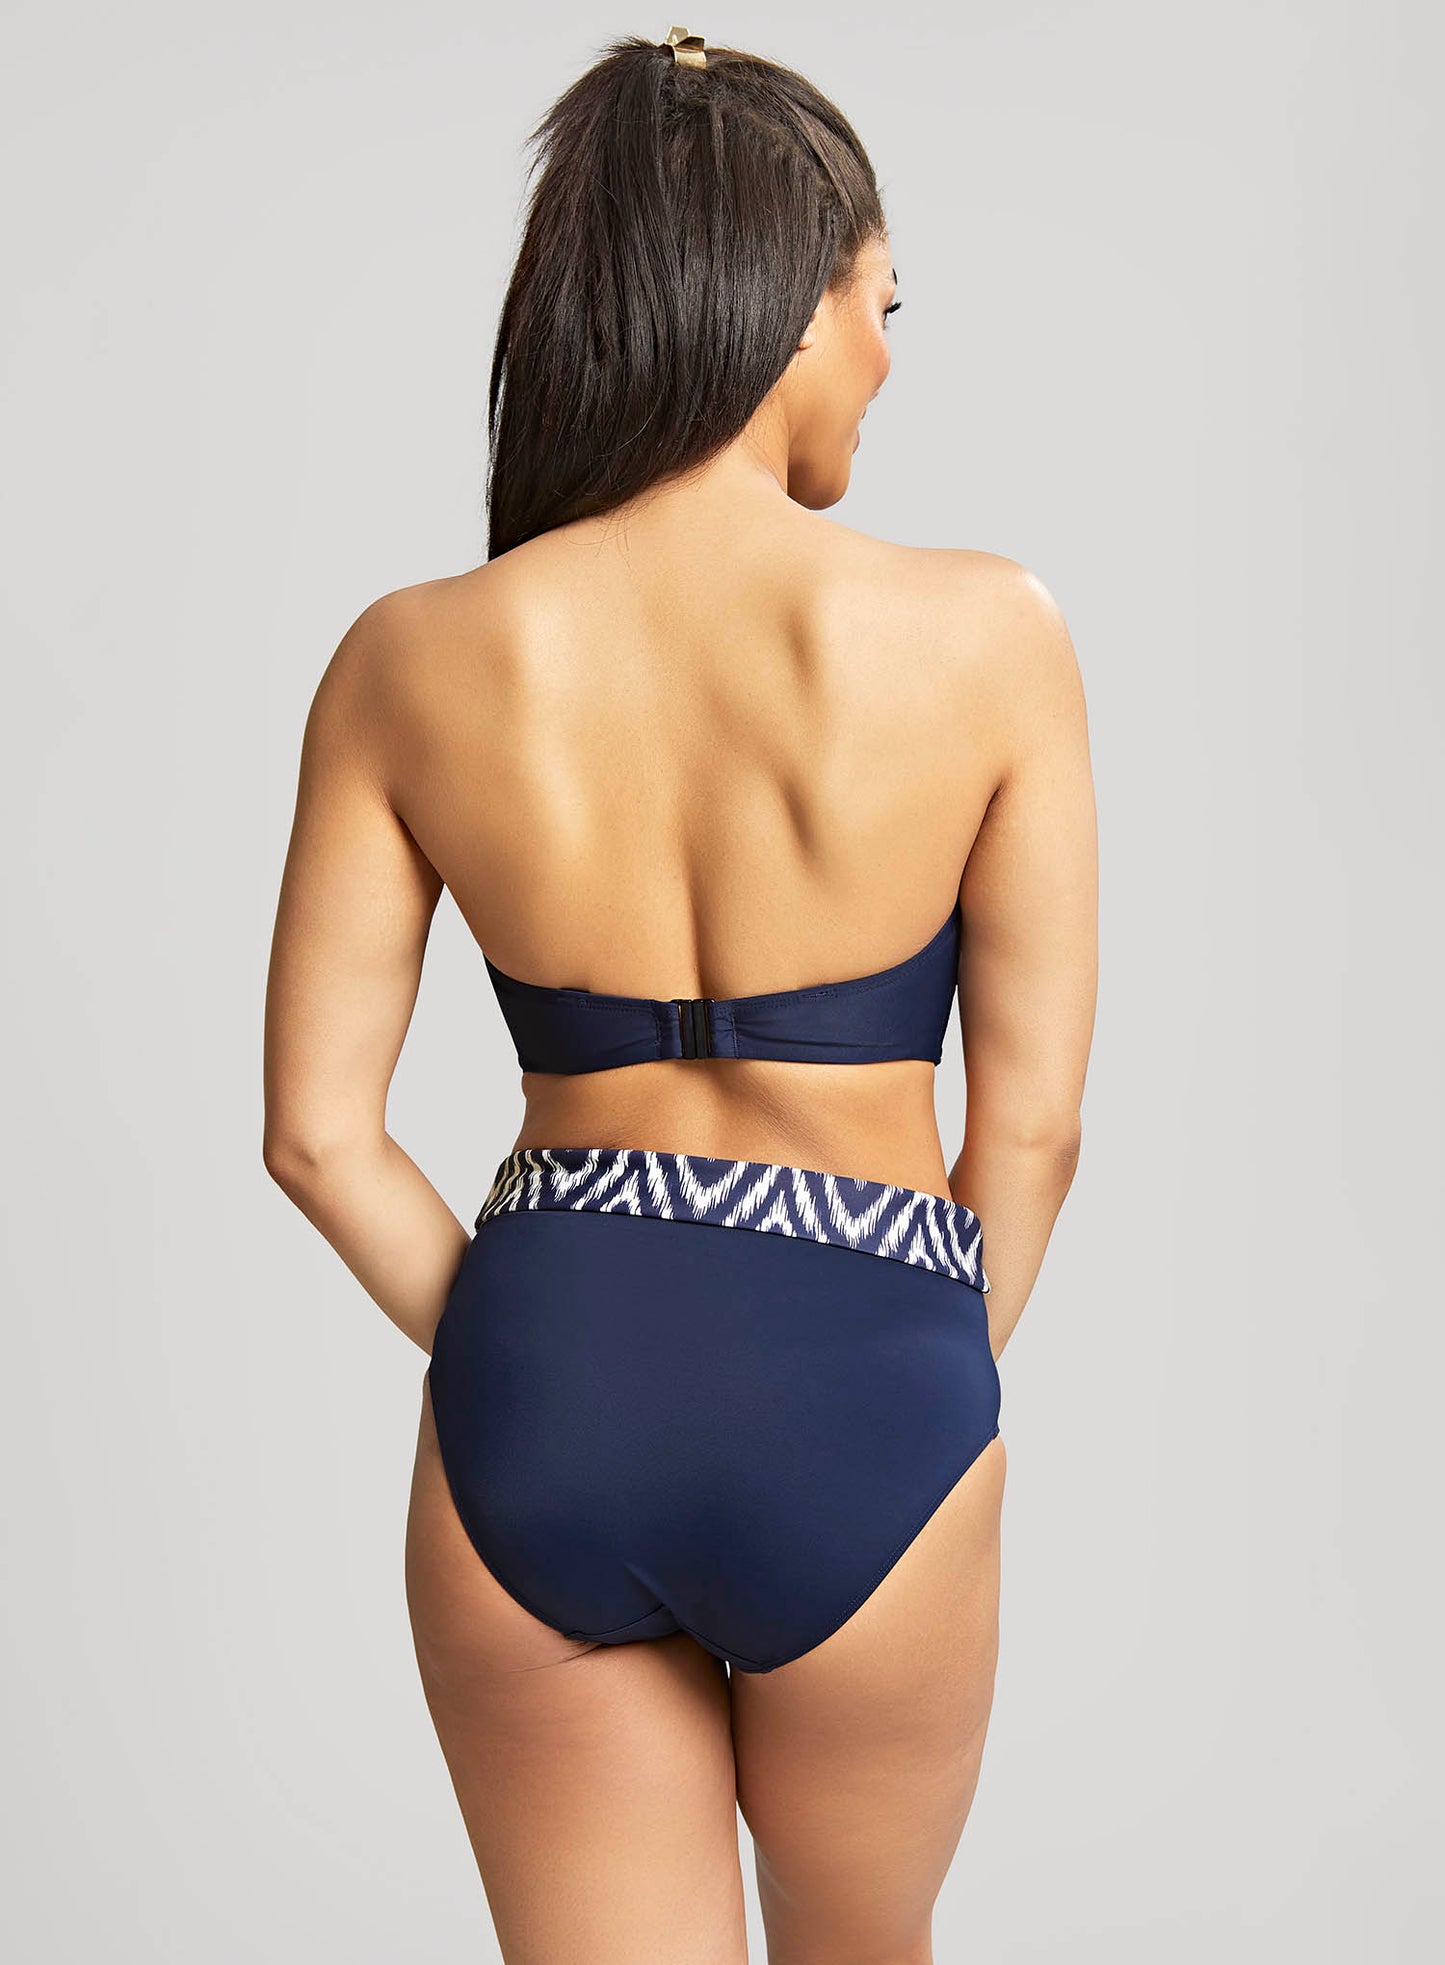 Panache Swimwear: Oceana Bandeau Underwired Bikini Top Navy